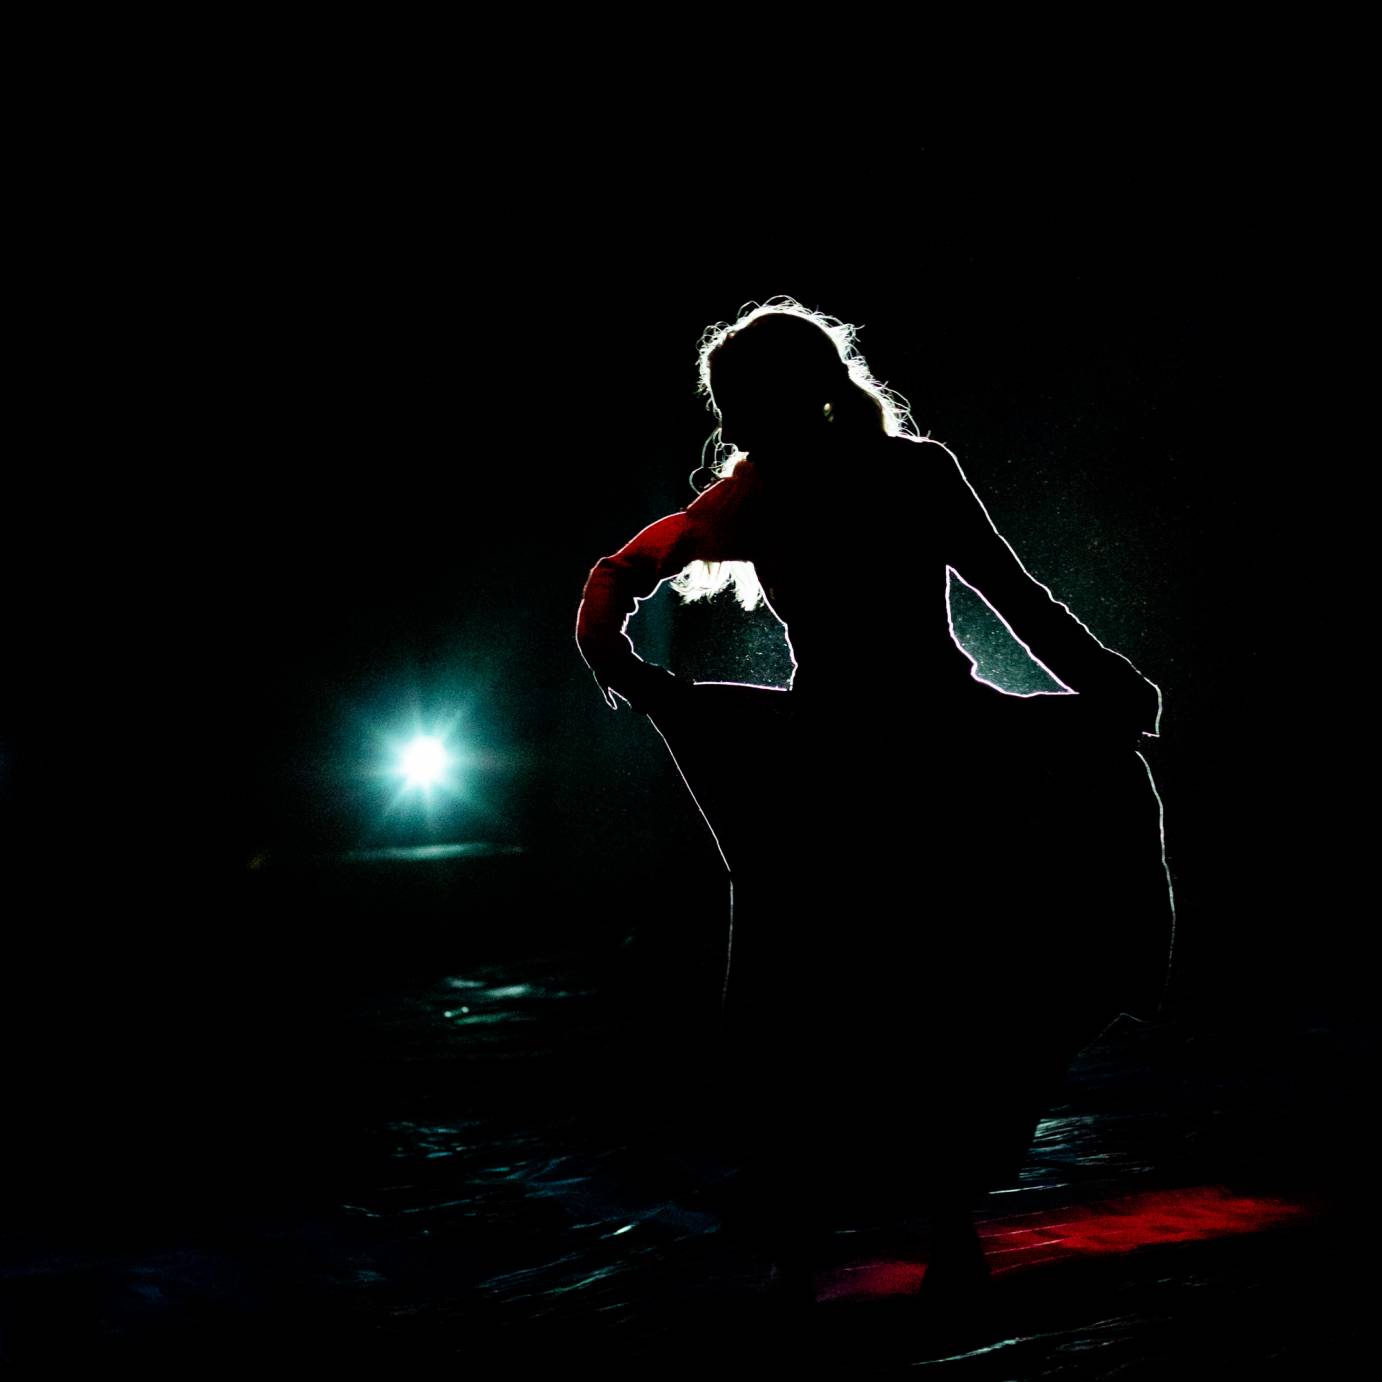 Against dark lighting, Alison Clancy holds the skirt of her red dress